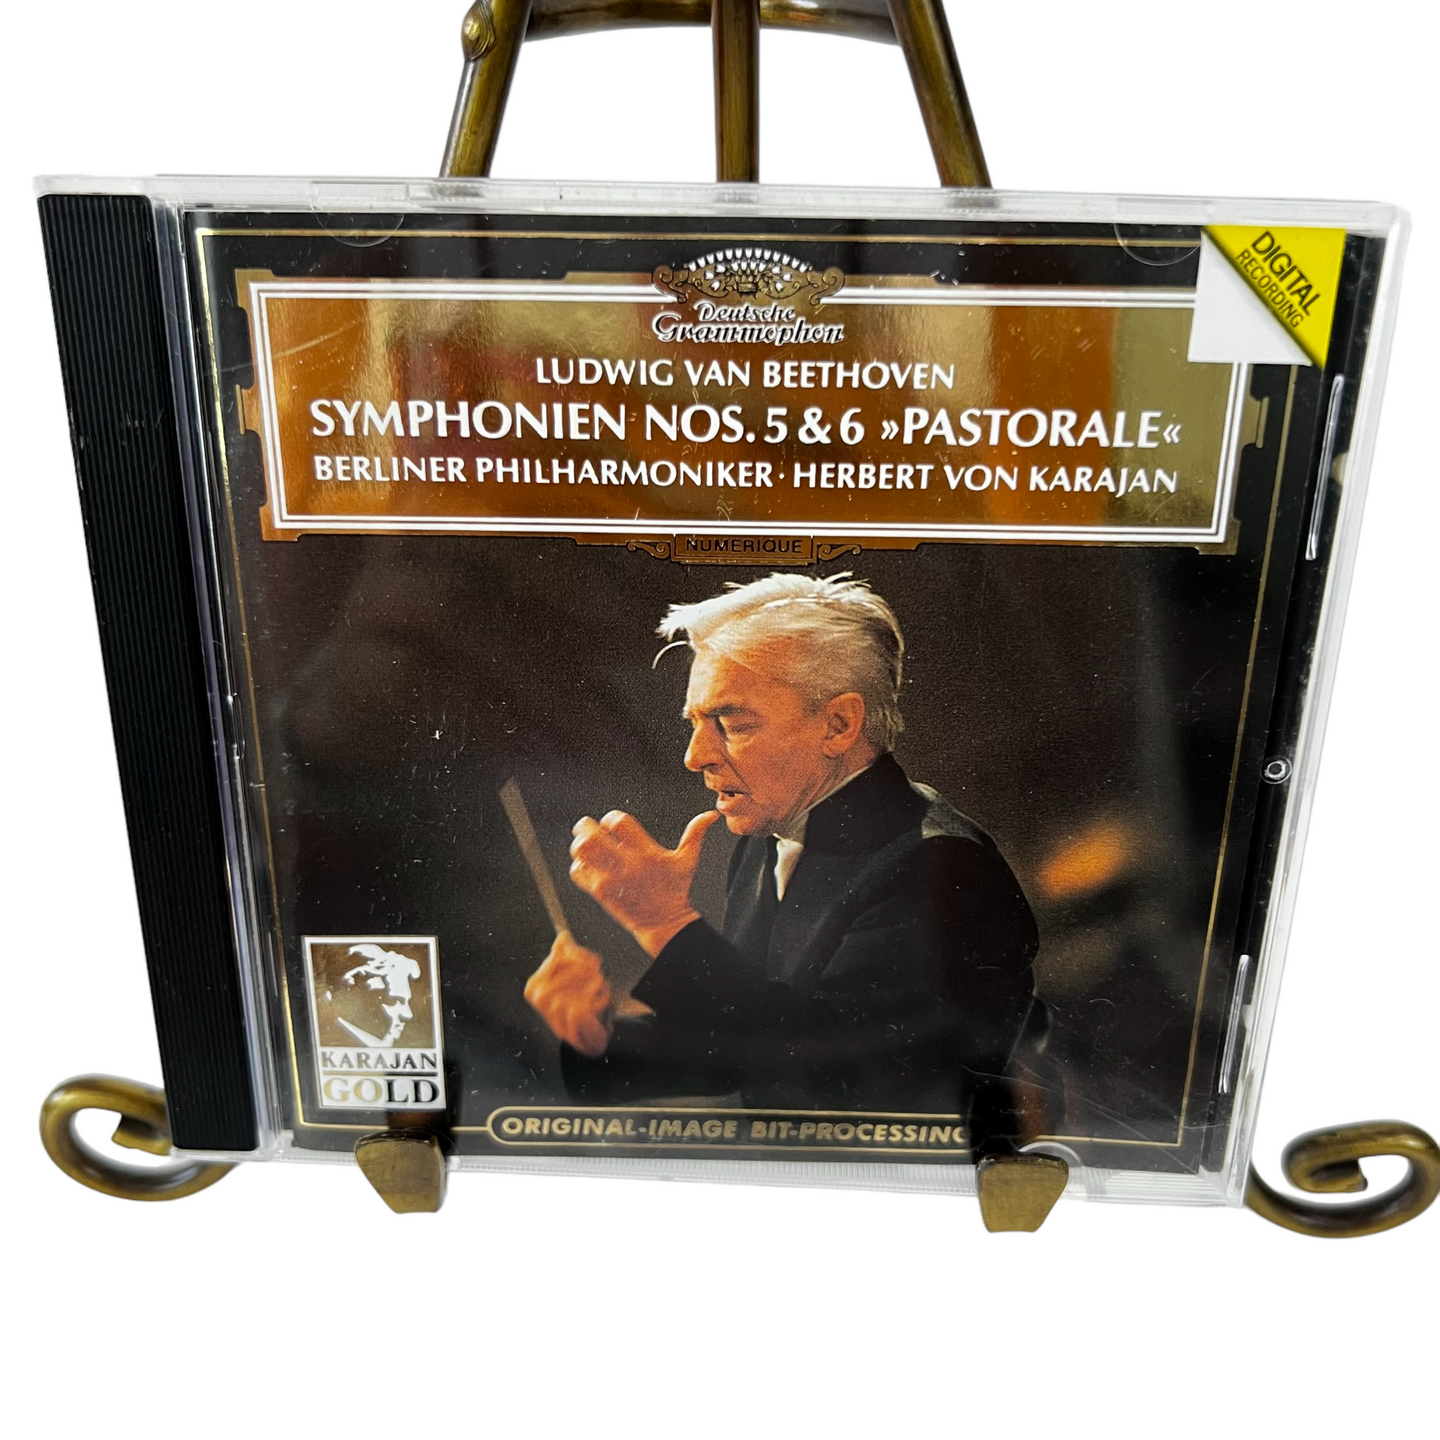 Ludwig Van Beethoven Symphonien Nos. 5 & 6 Pastoral